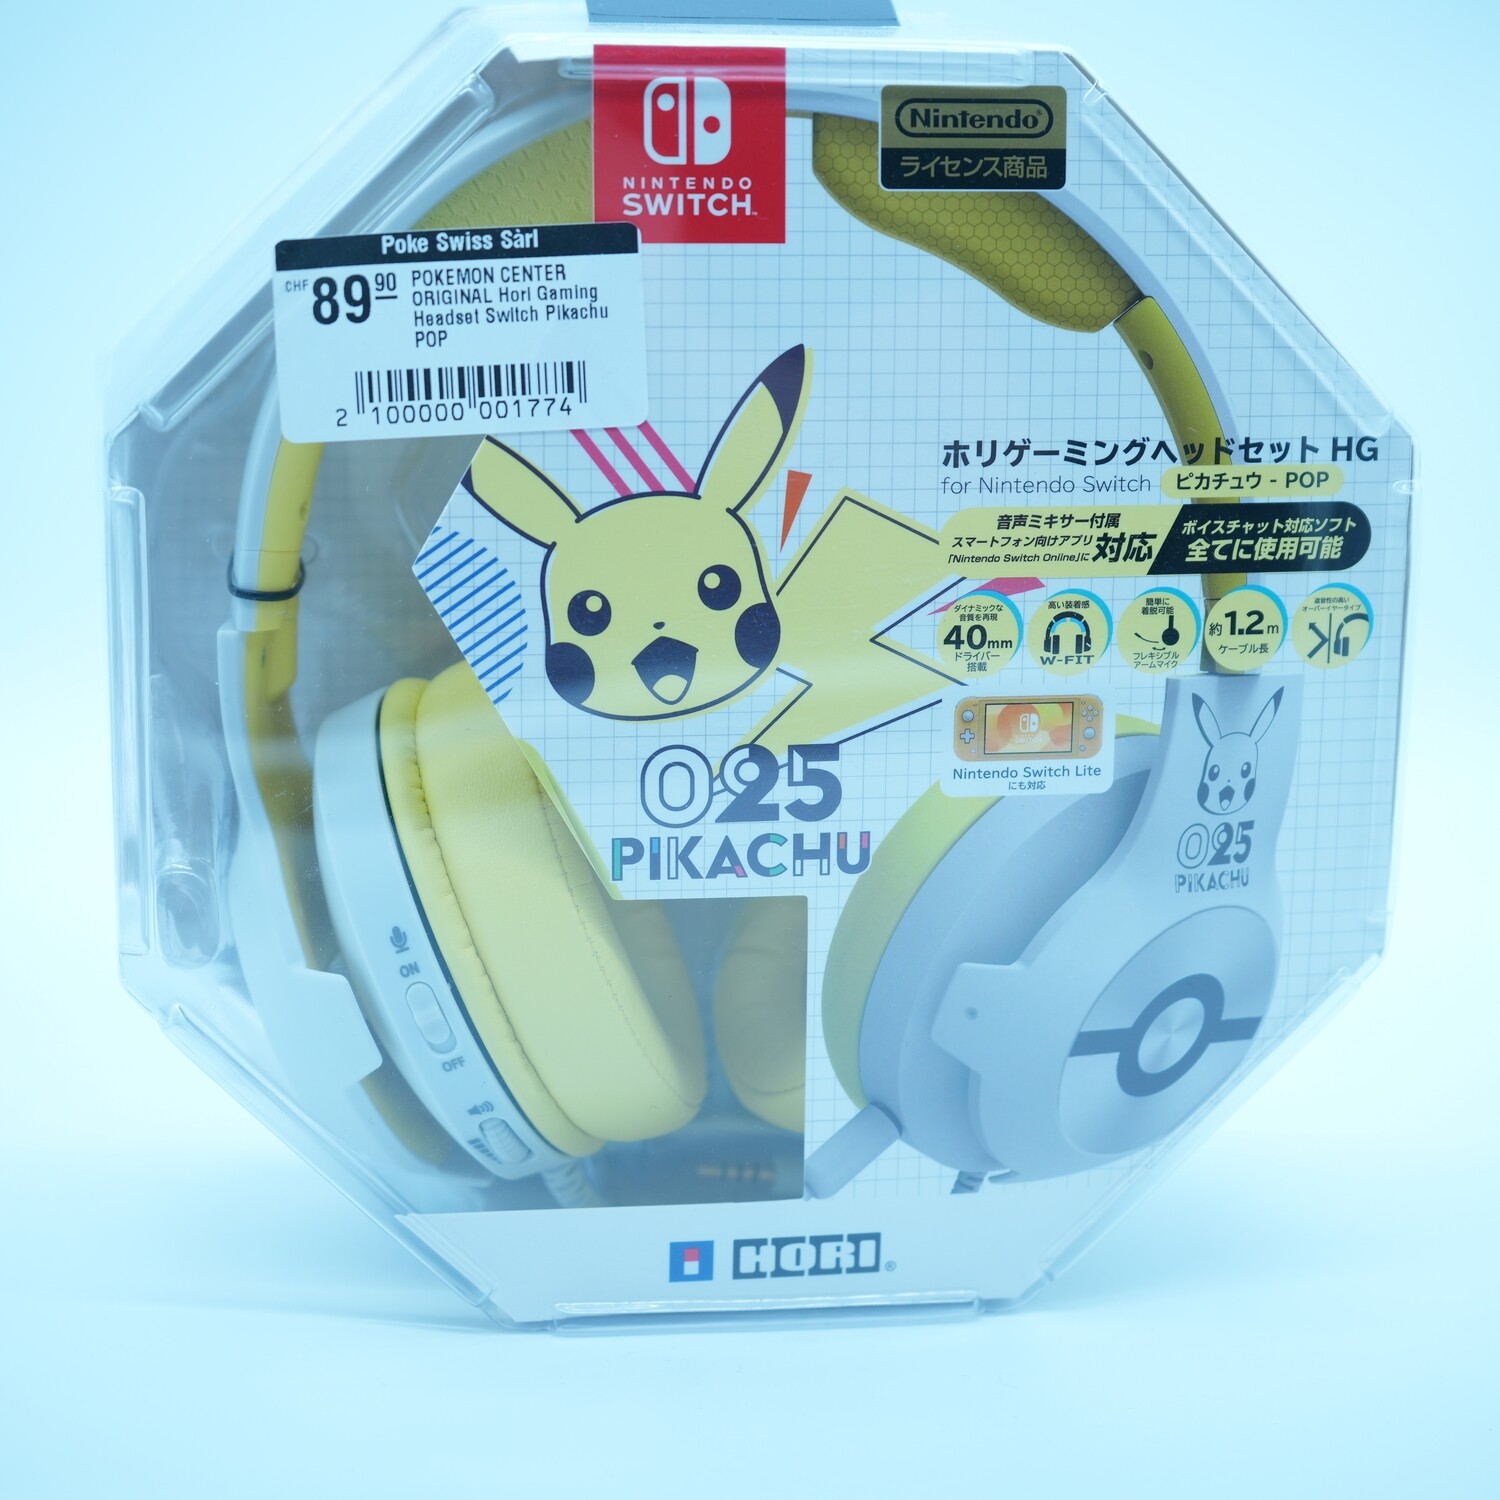 POKEMON CENTER ORIGINAL Hori Gaming Headset Switch Pikachu POP